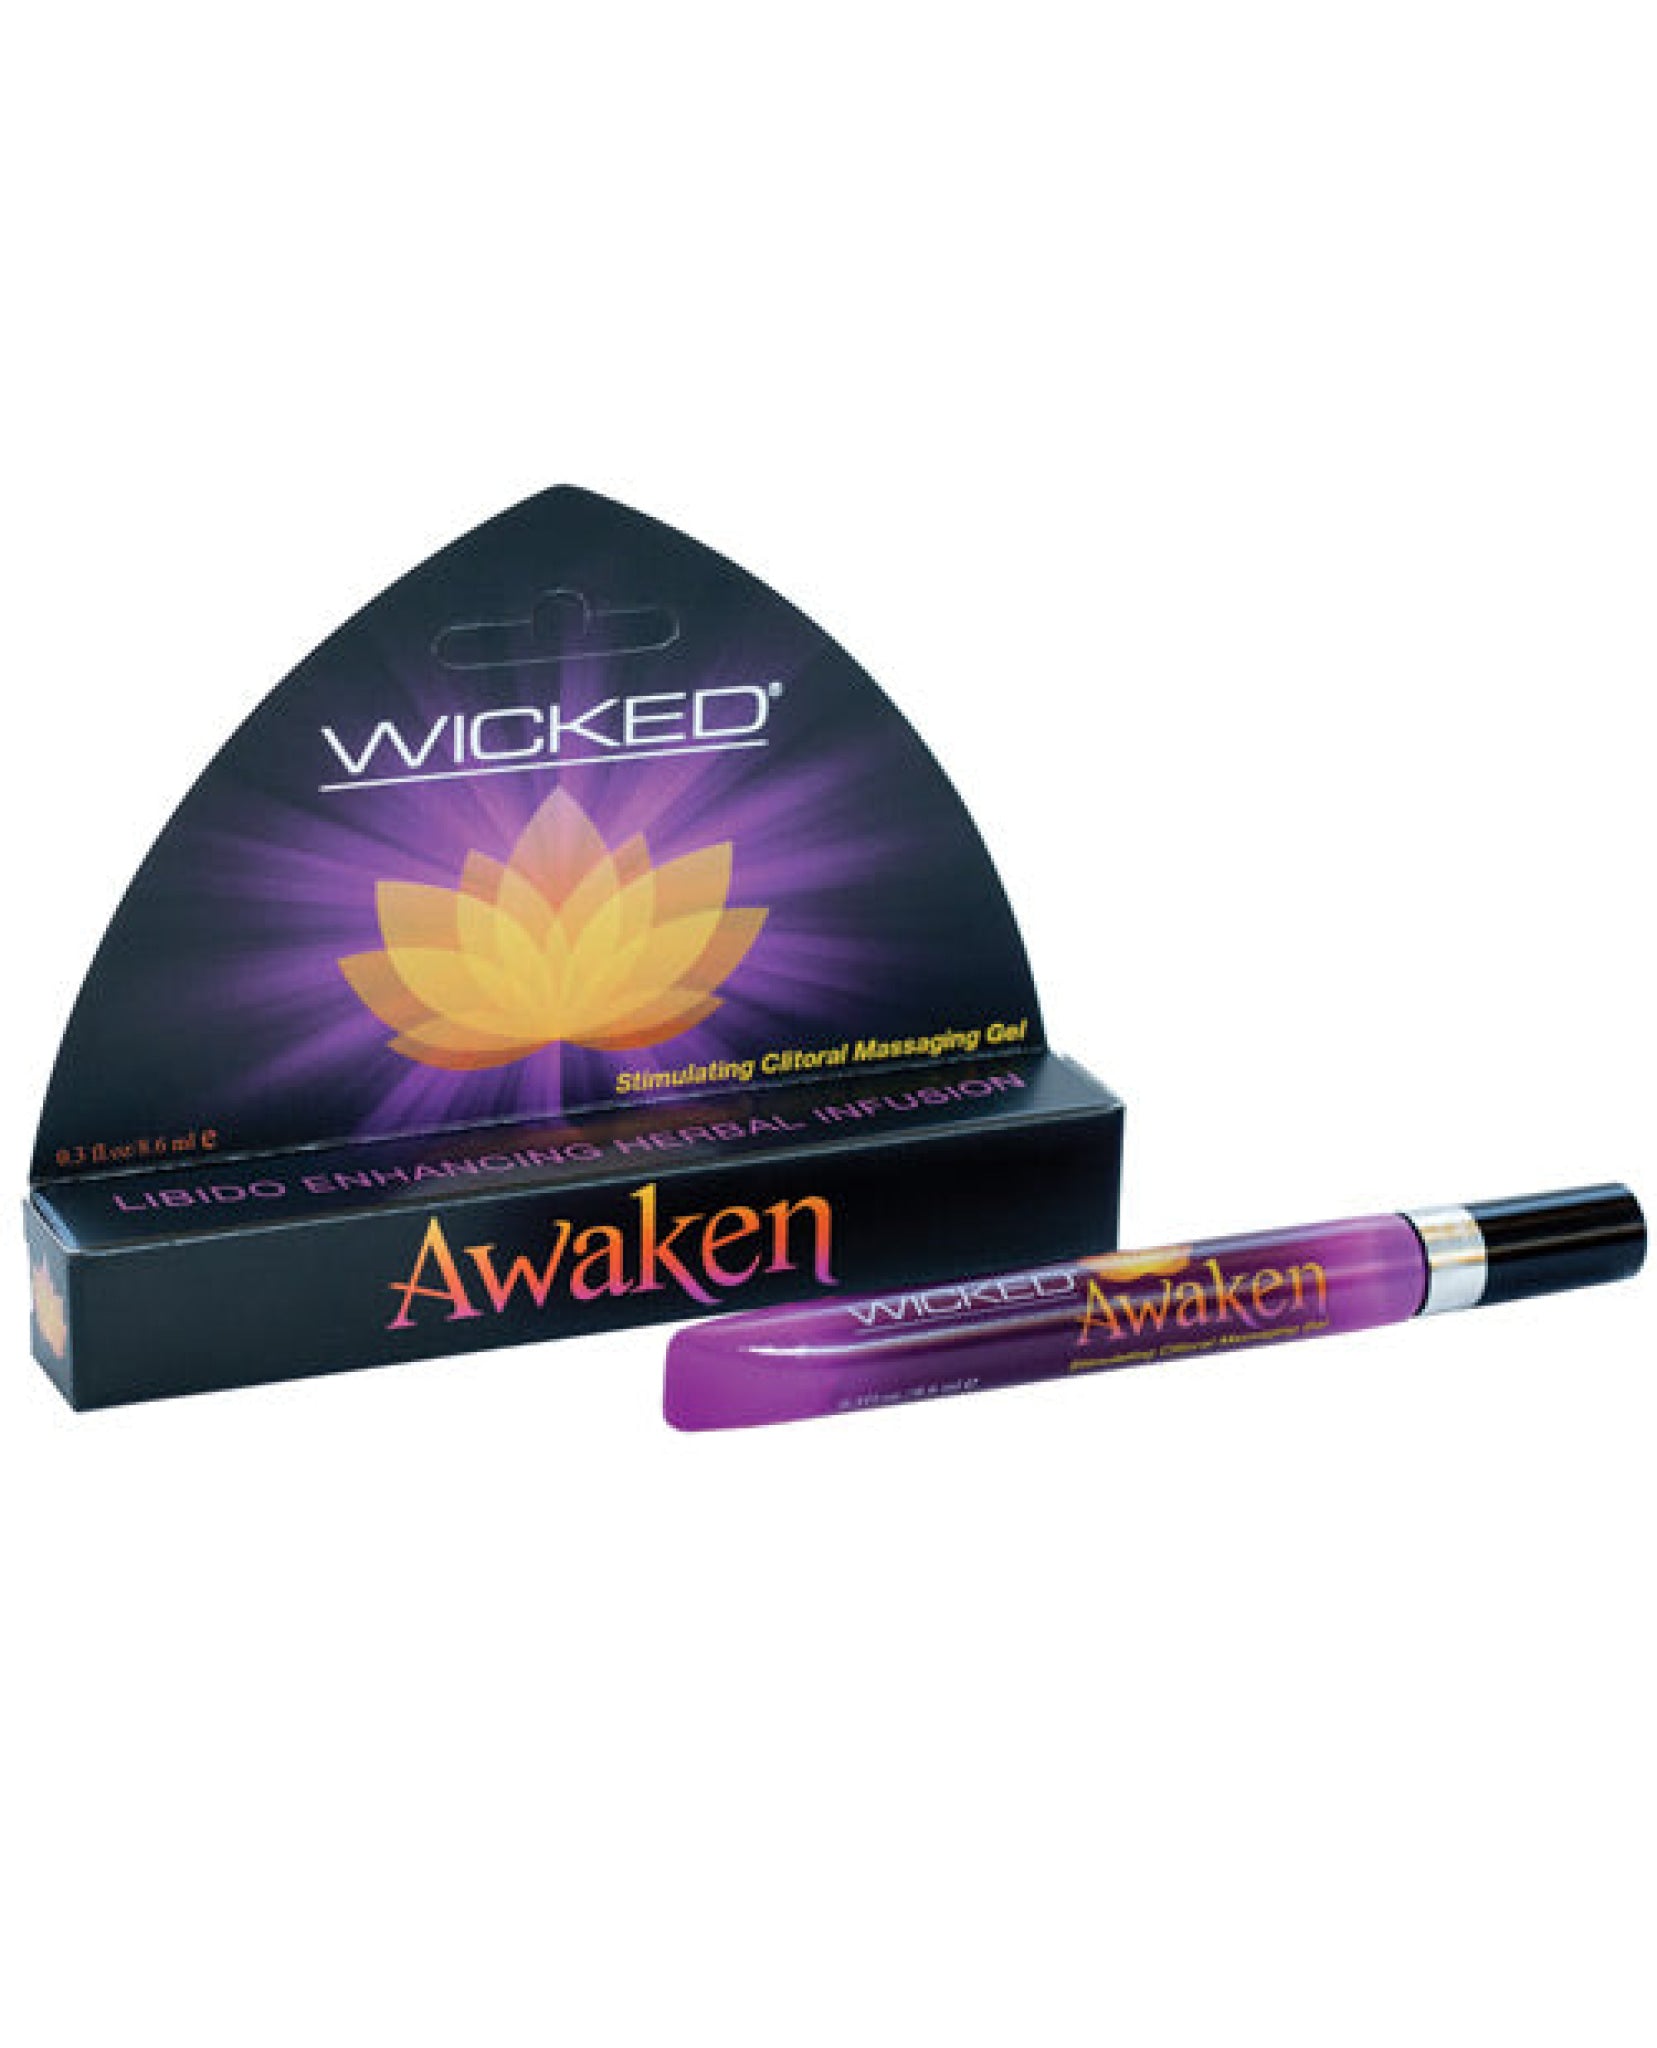 Wicked Sensual Care Awaken Stimulating Clitoral Massaging Gel - .3 Oz Wicked Sensual Care